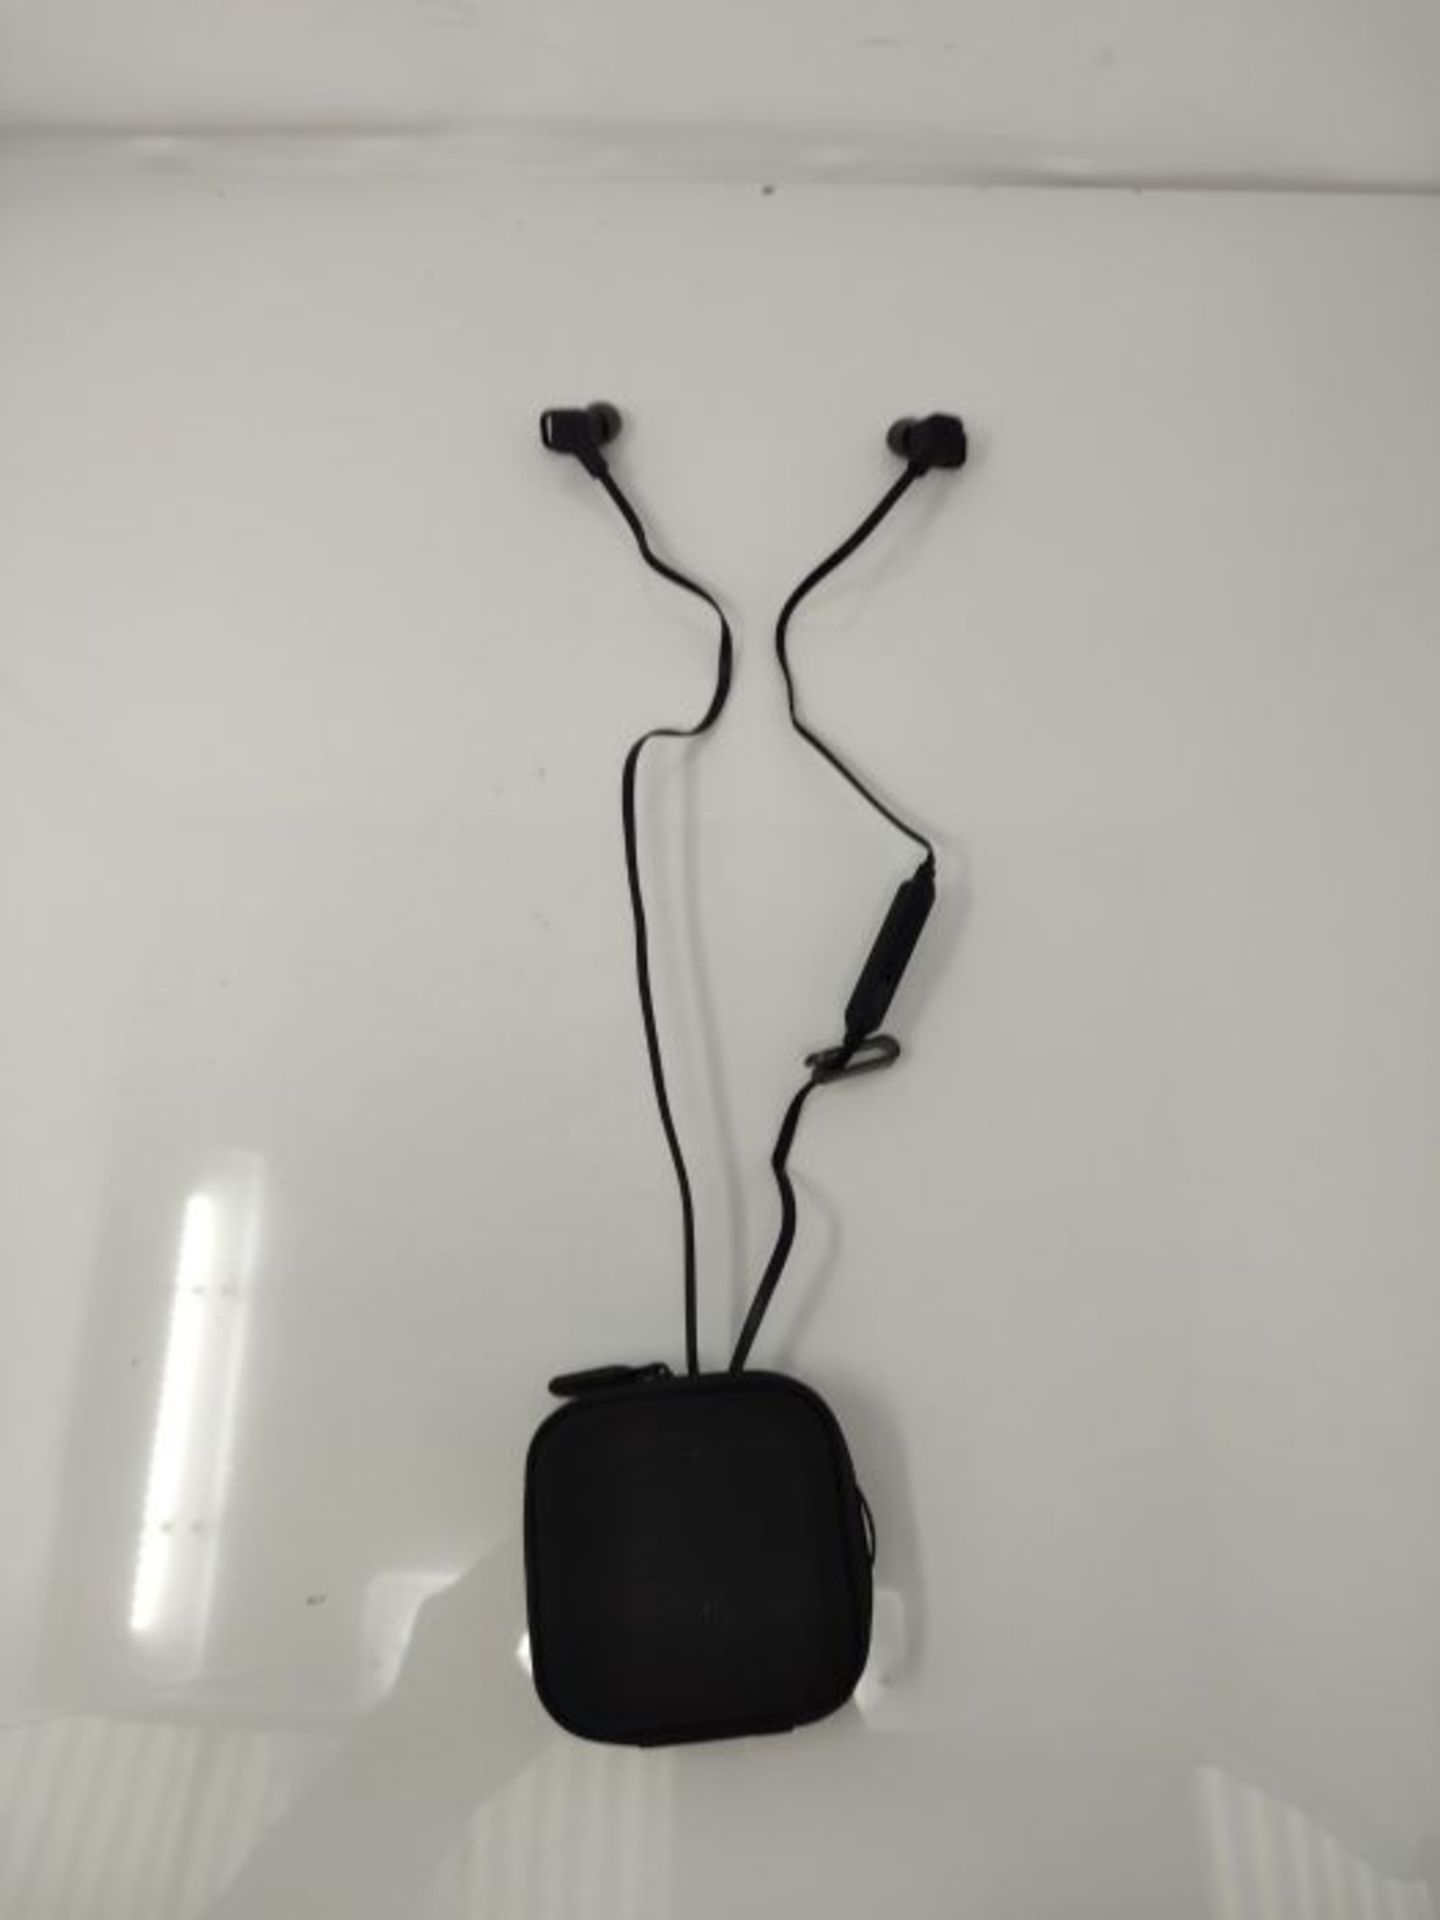 HP OMEN Dyad Earbuds EMEA - INTL English - Image 3 of 3